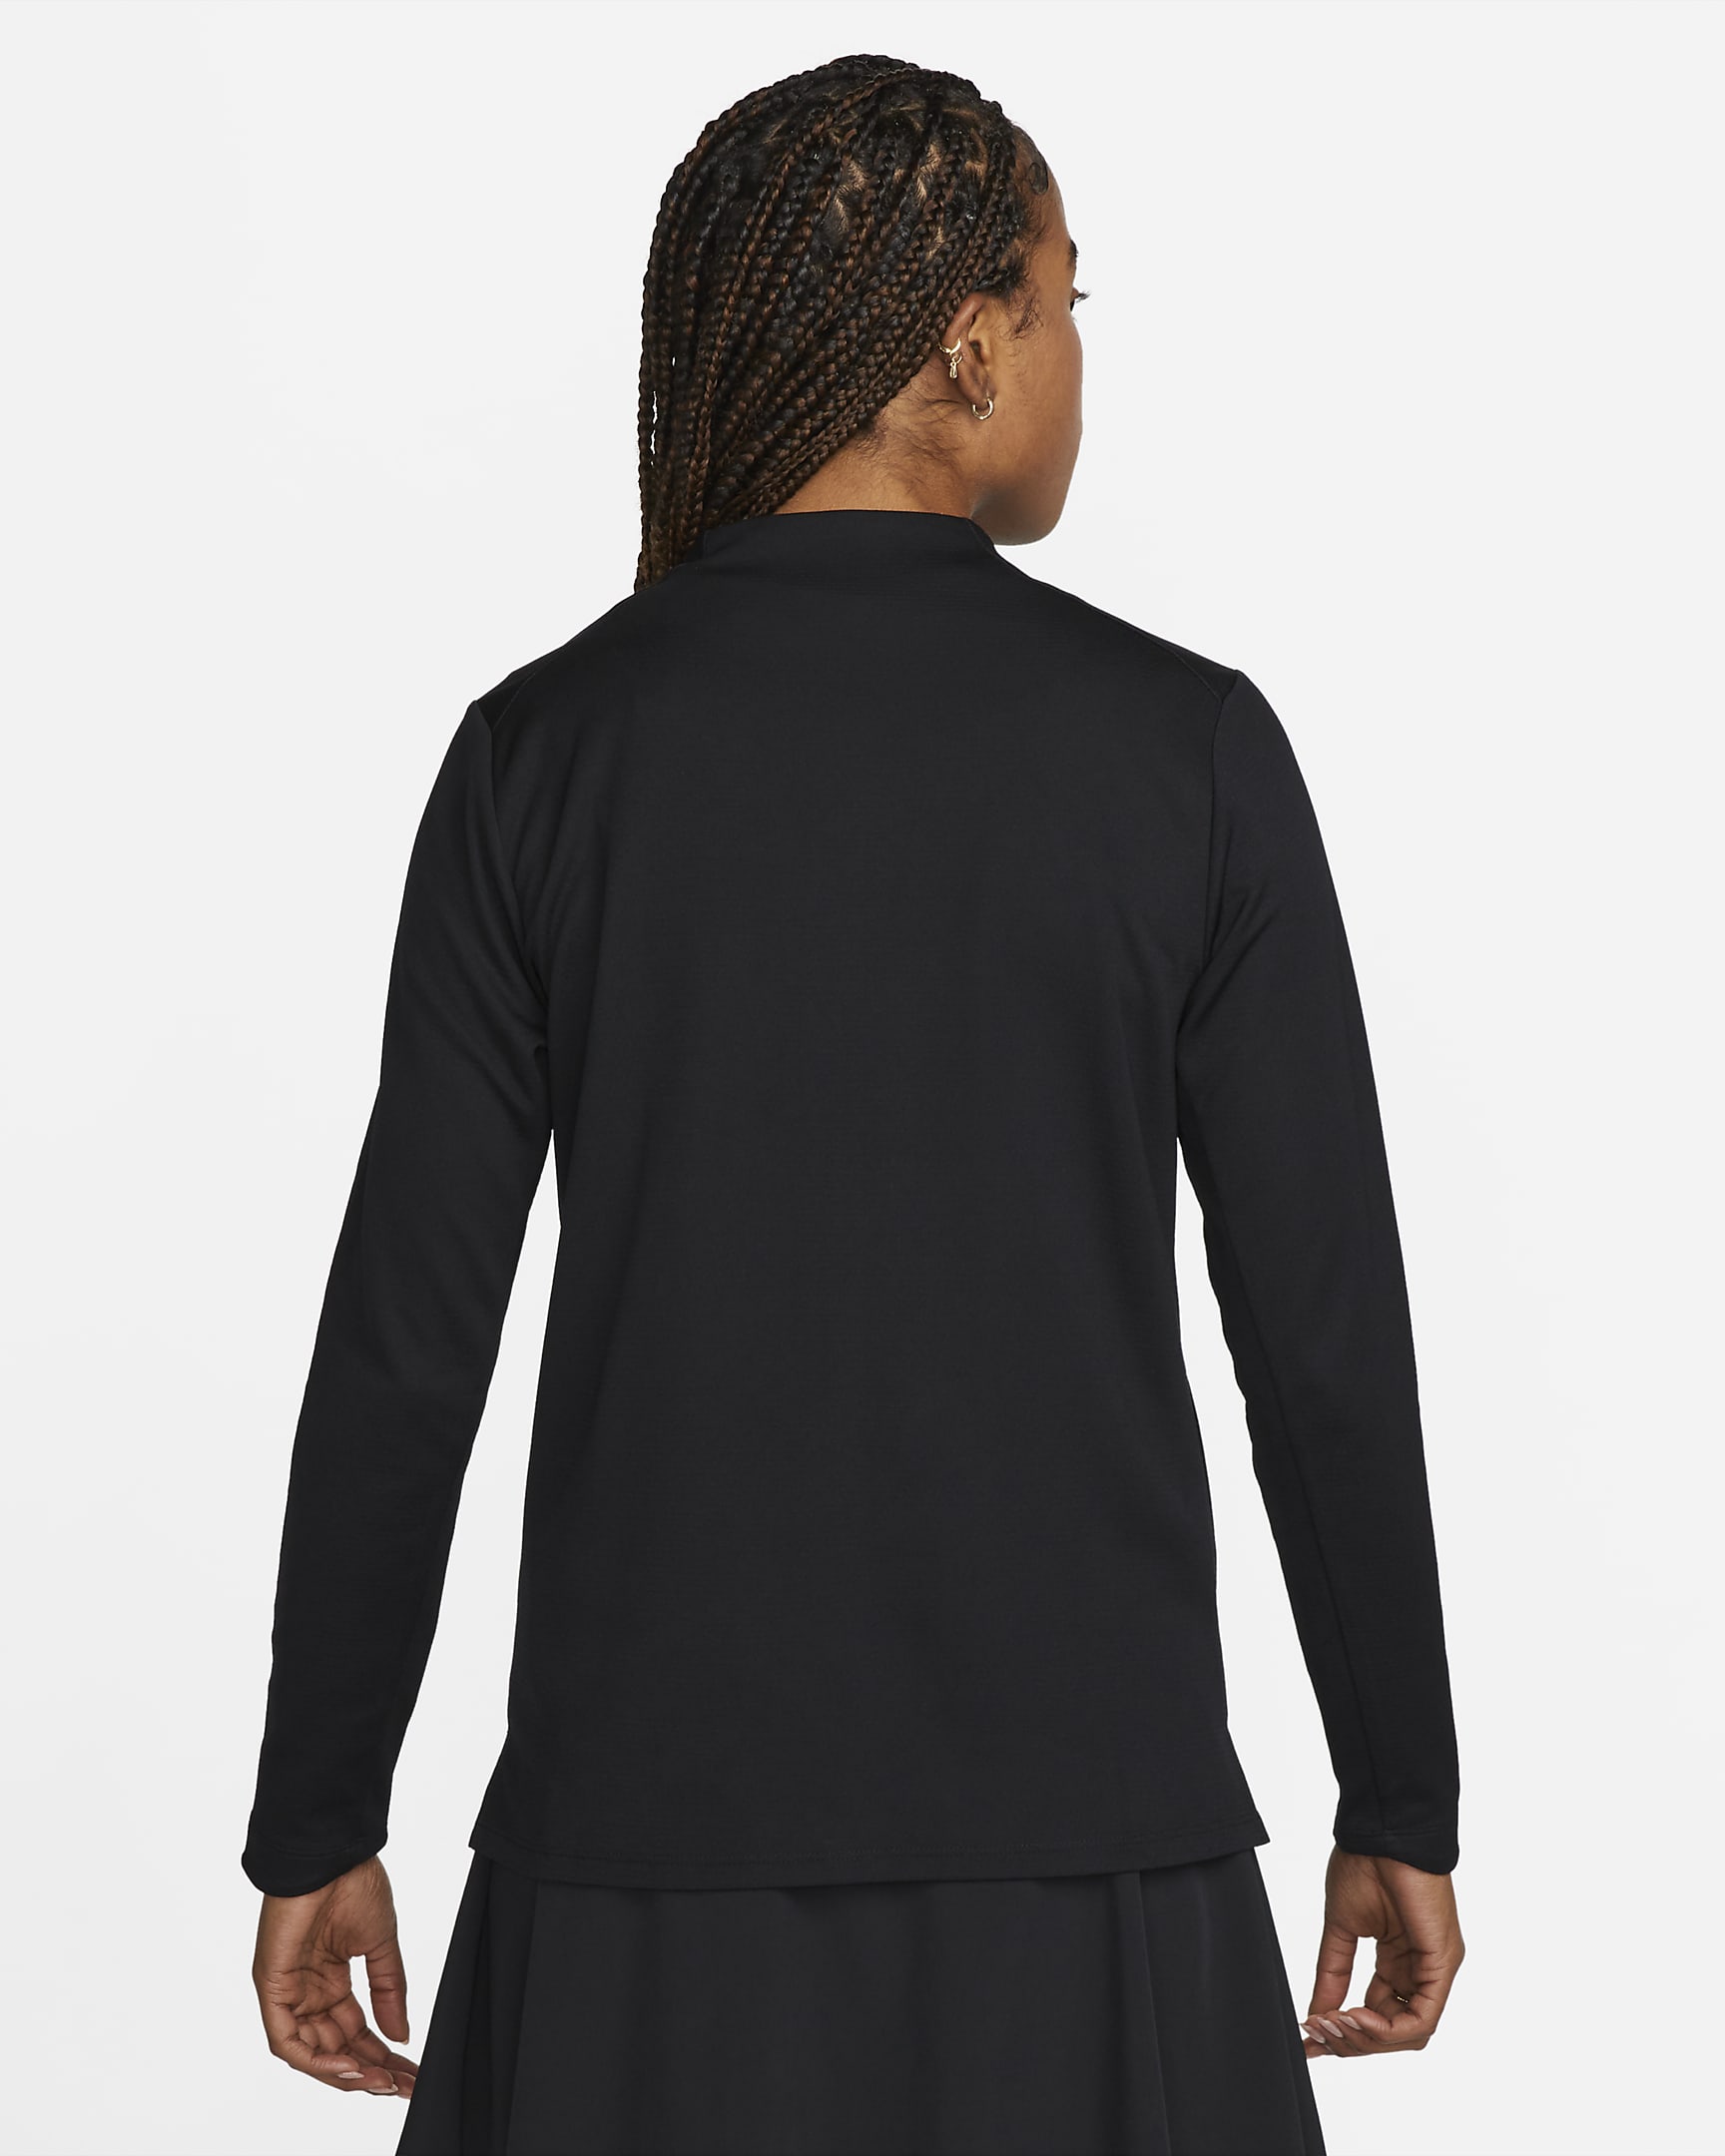 Nike Dri-FIT UV Advantage Women's Full-Zip Top. Nike RO